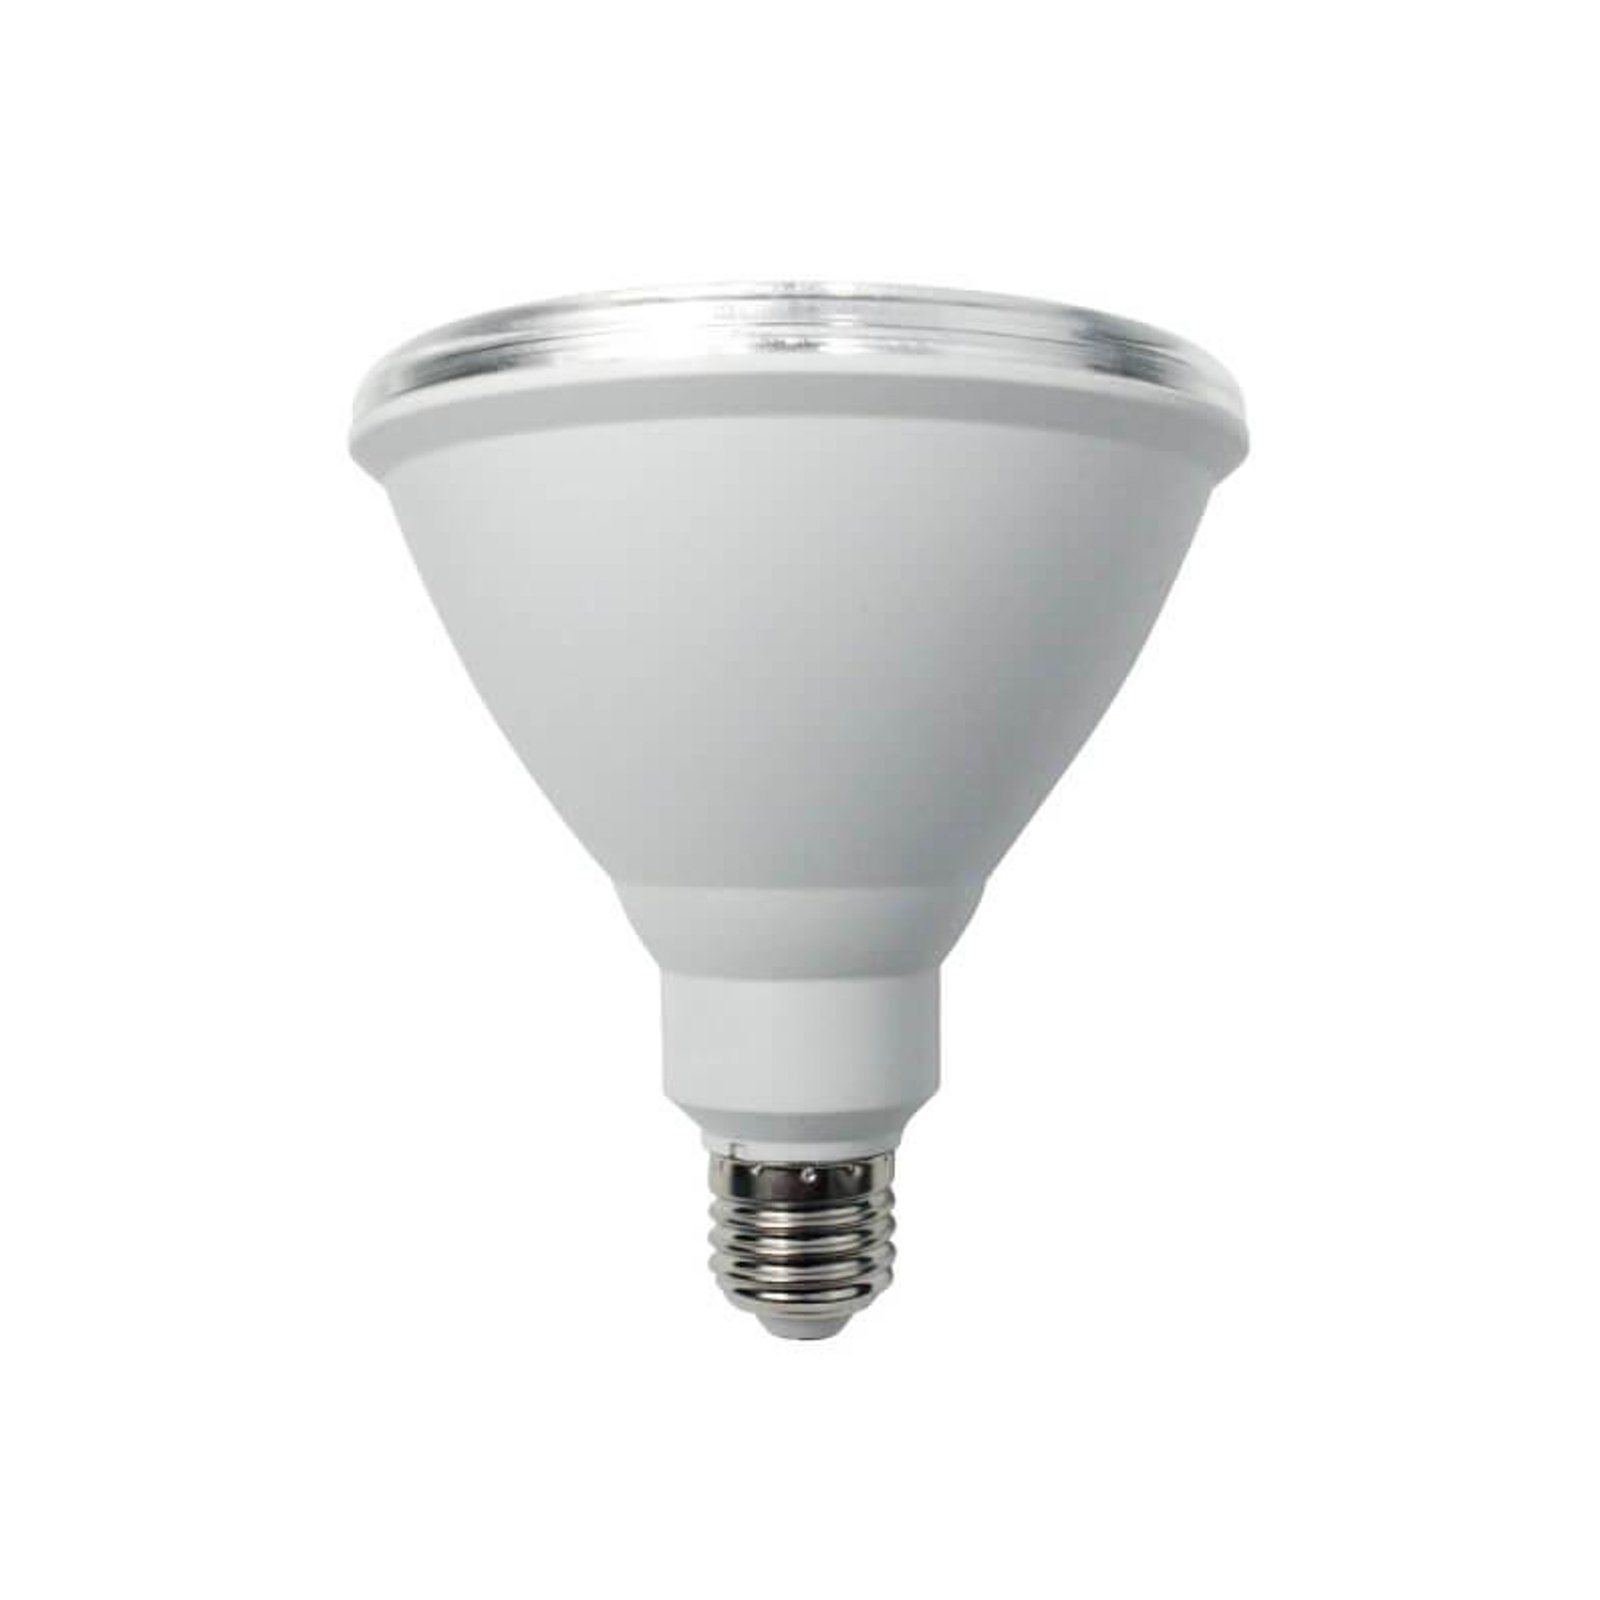 LED lamp reflector, 840, RODER, PAR38, E27, 15W